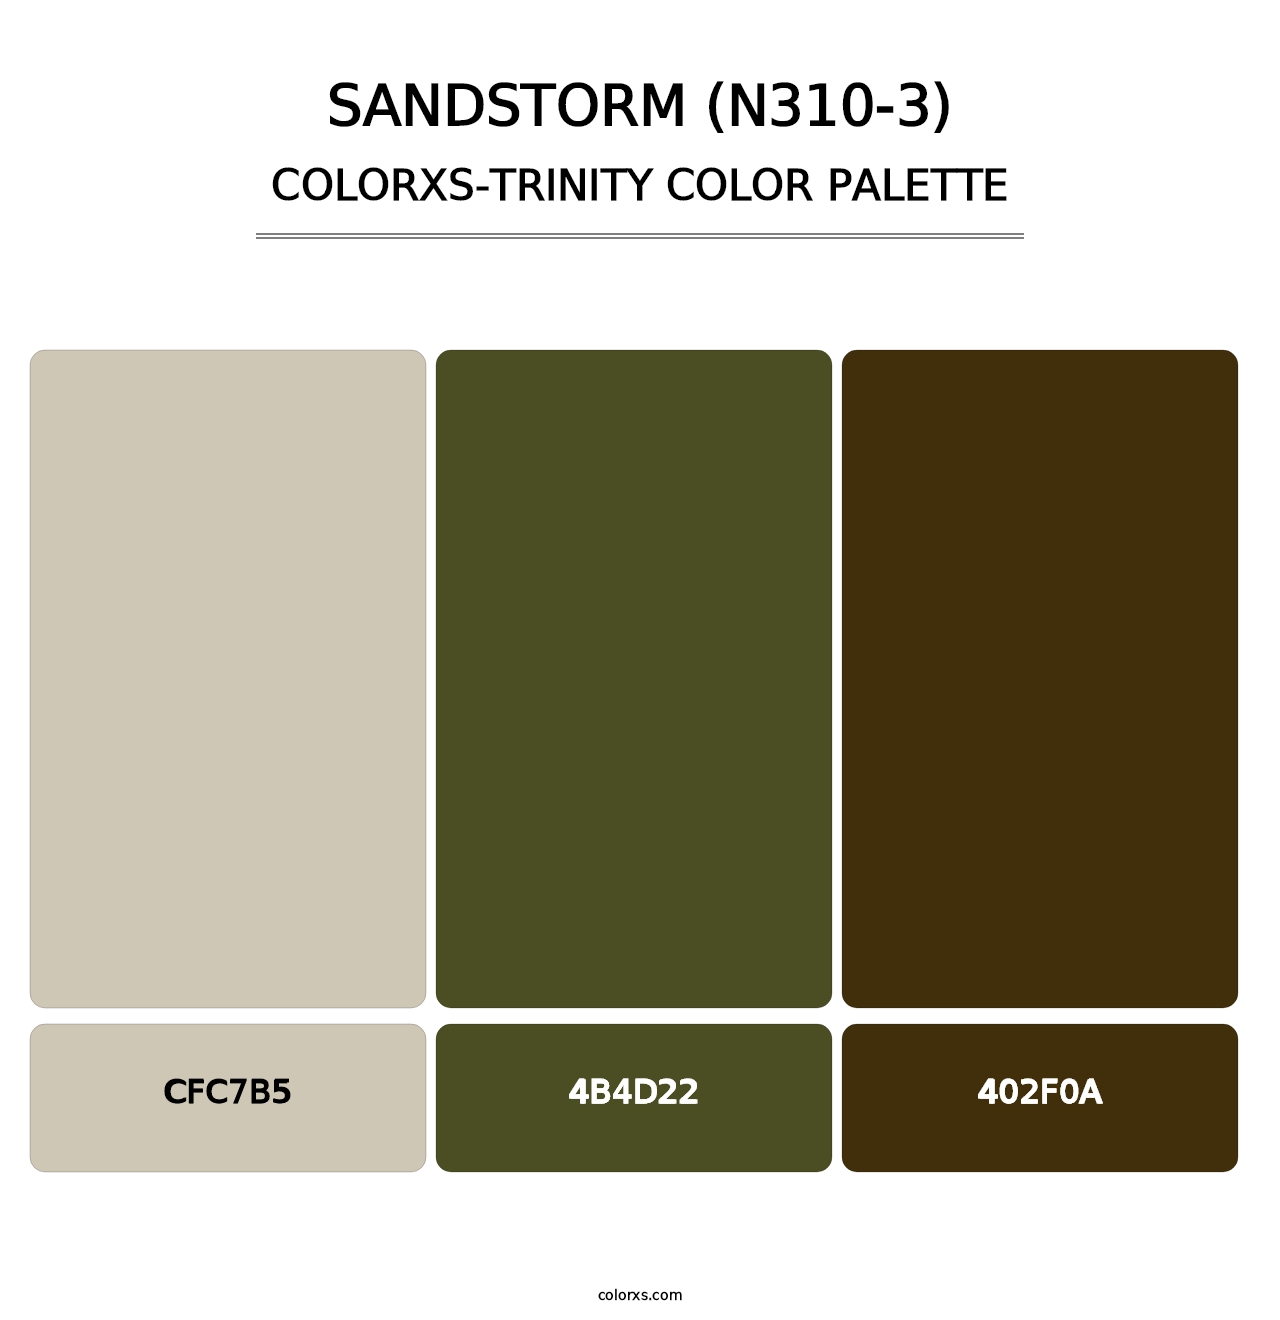 Sandstorm (N310-3) - Colorxs Trinity Palette